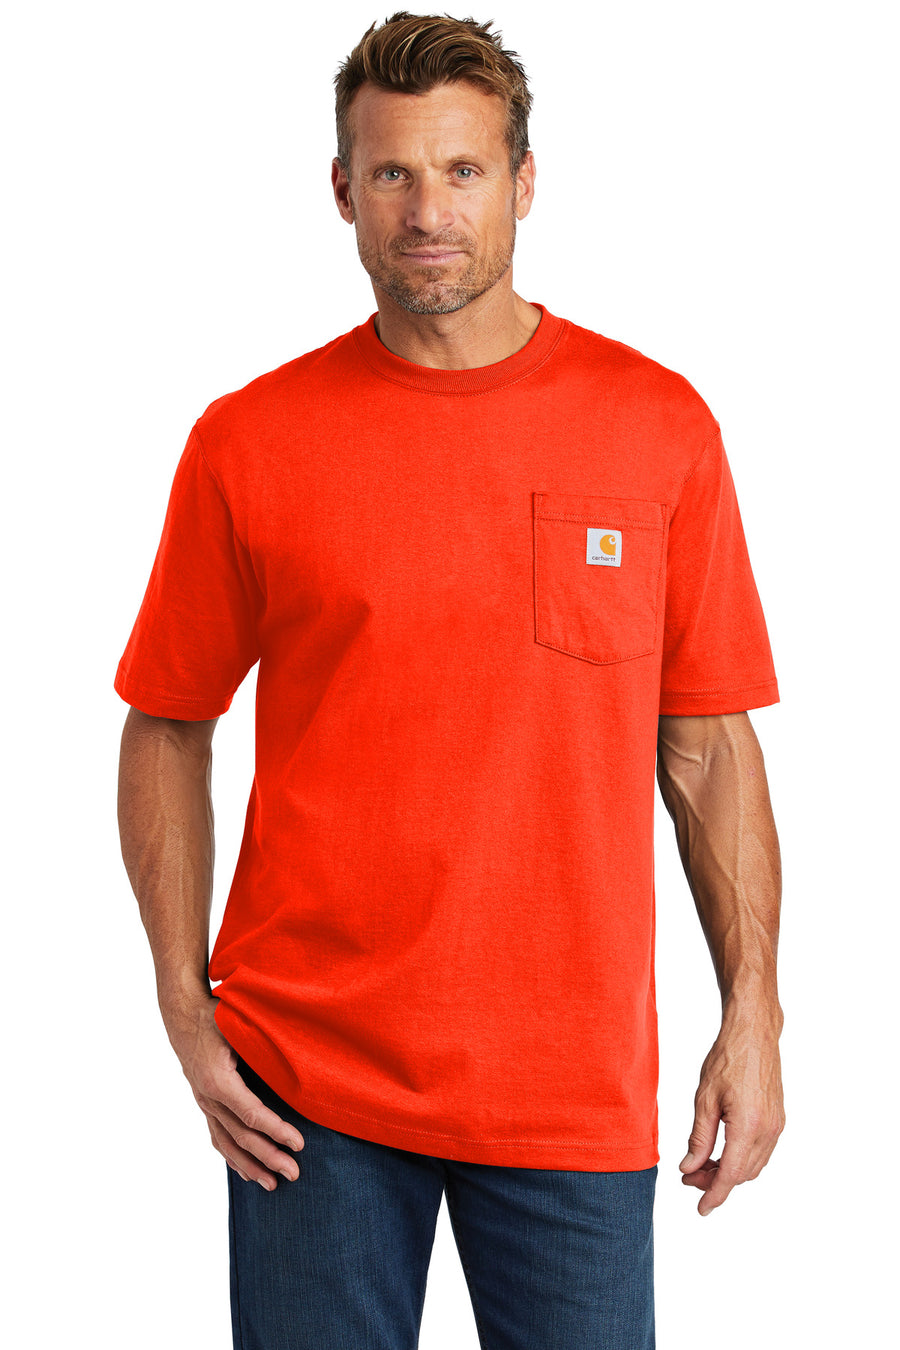 Carhartt Workwear Pocket Short Sleeve T-Shirt.